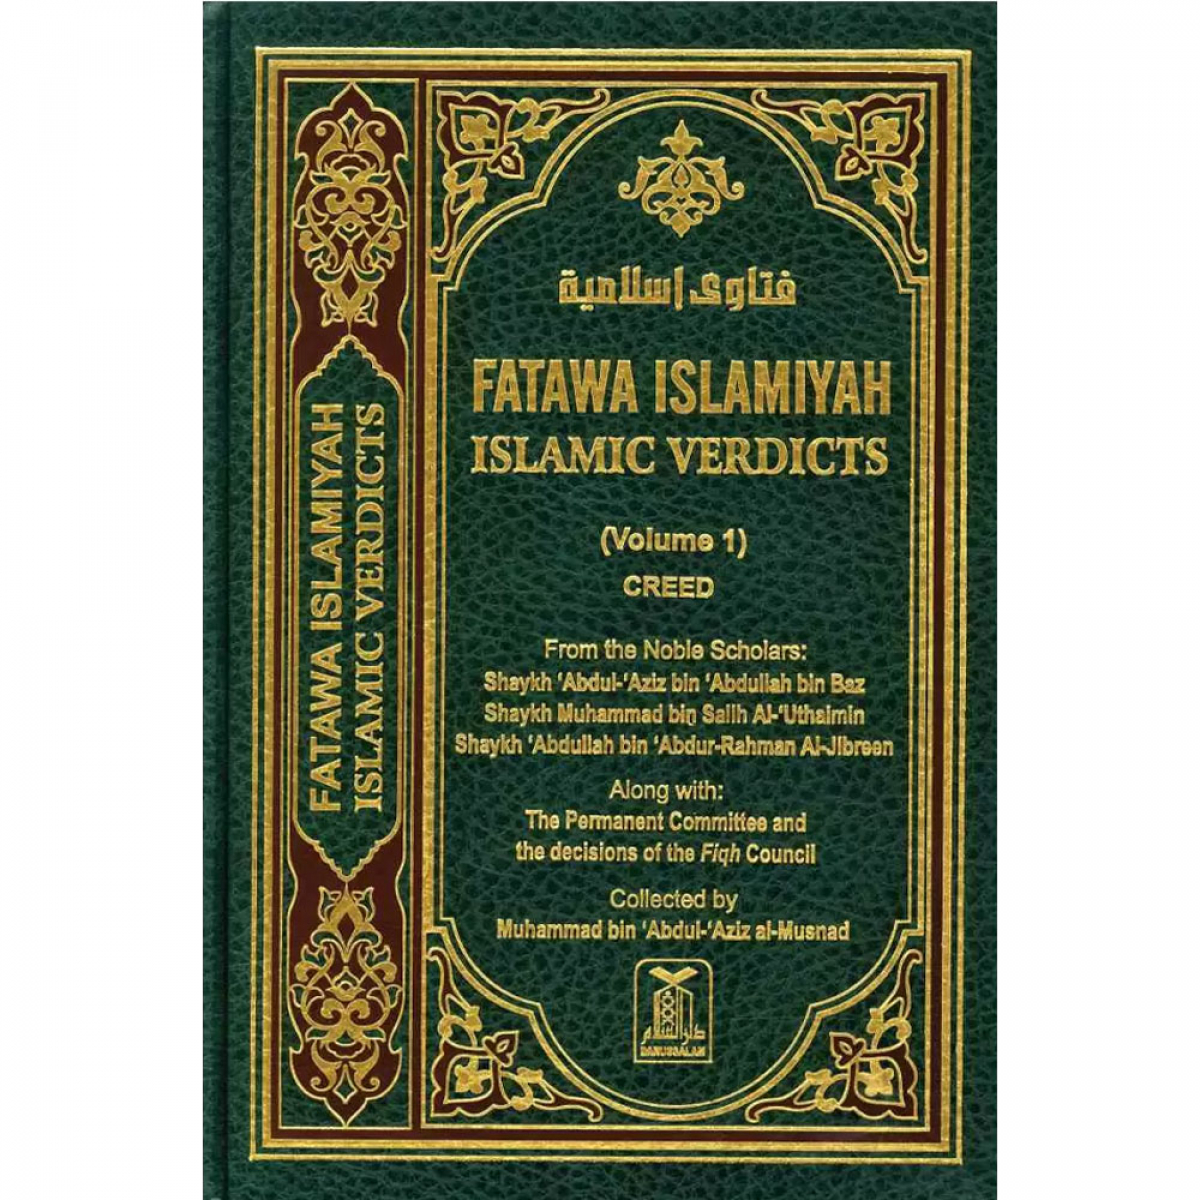 Fatawah Islamiyah Islamic Verdicts 8 Volume Set (Darussalam)